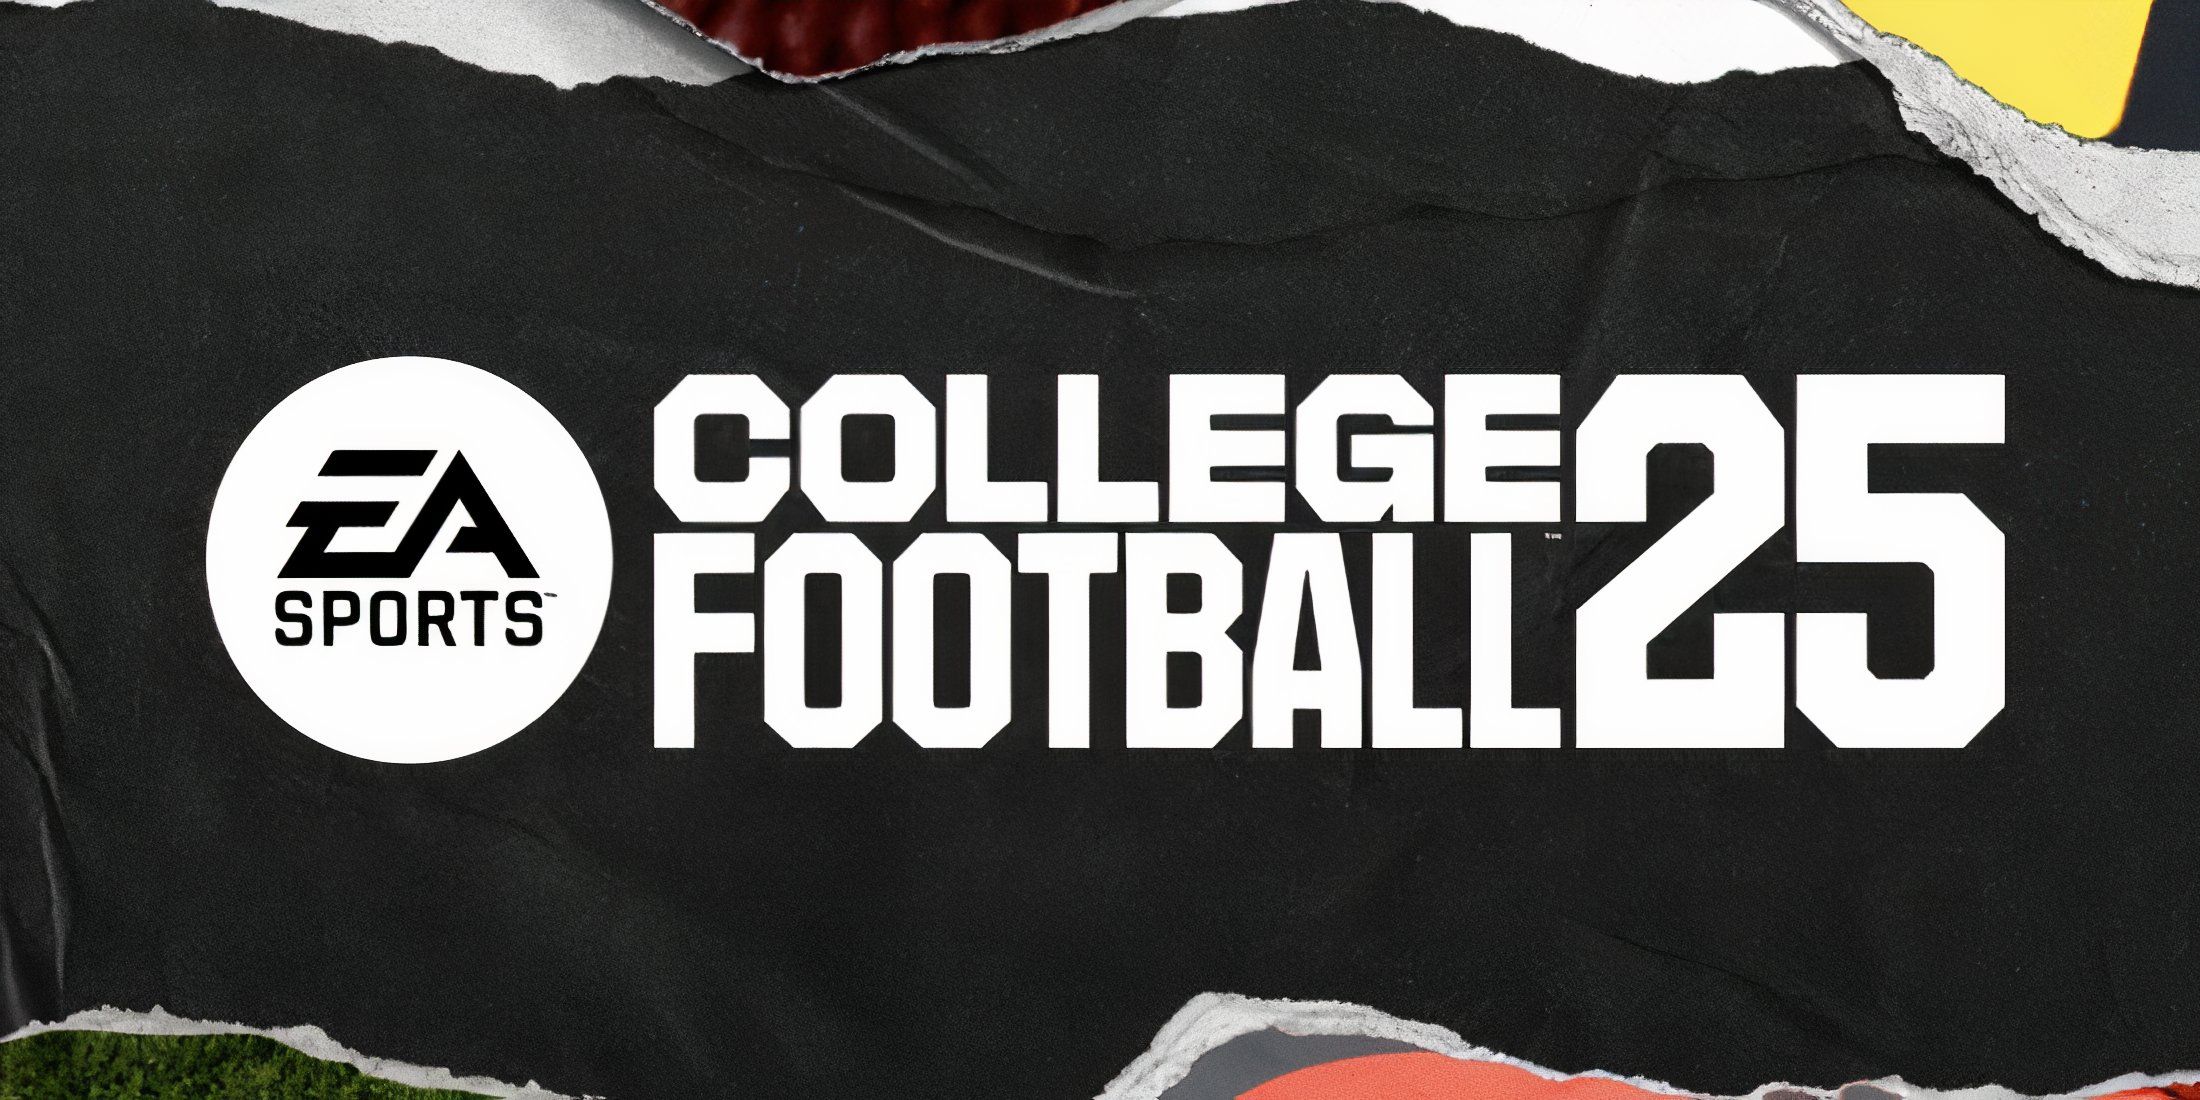 EA-Sports-College-Football-25